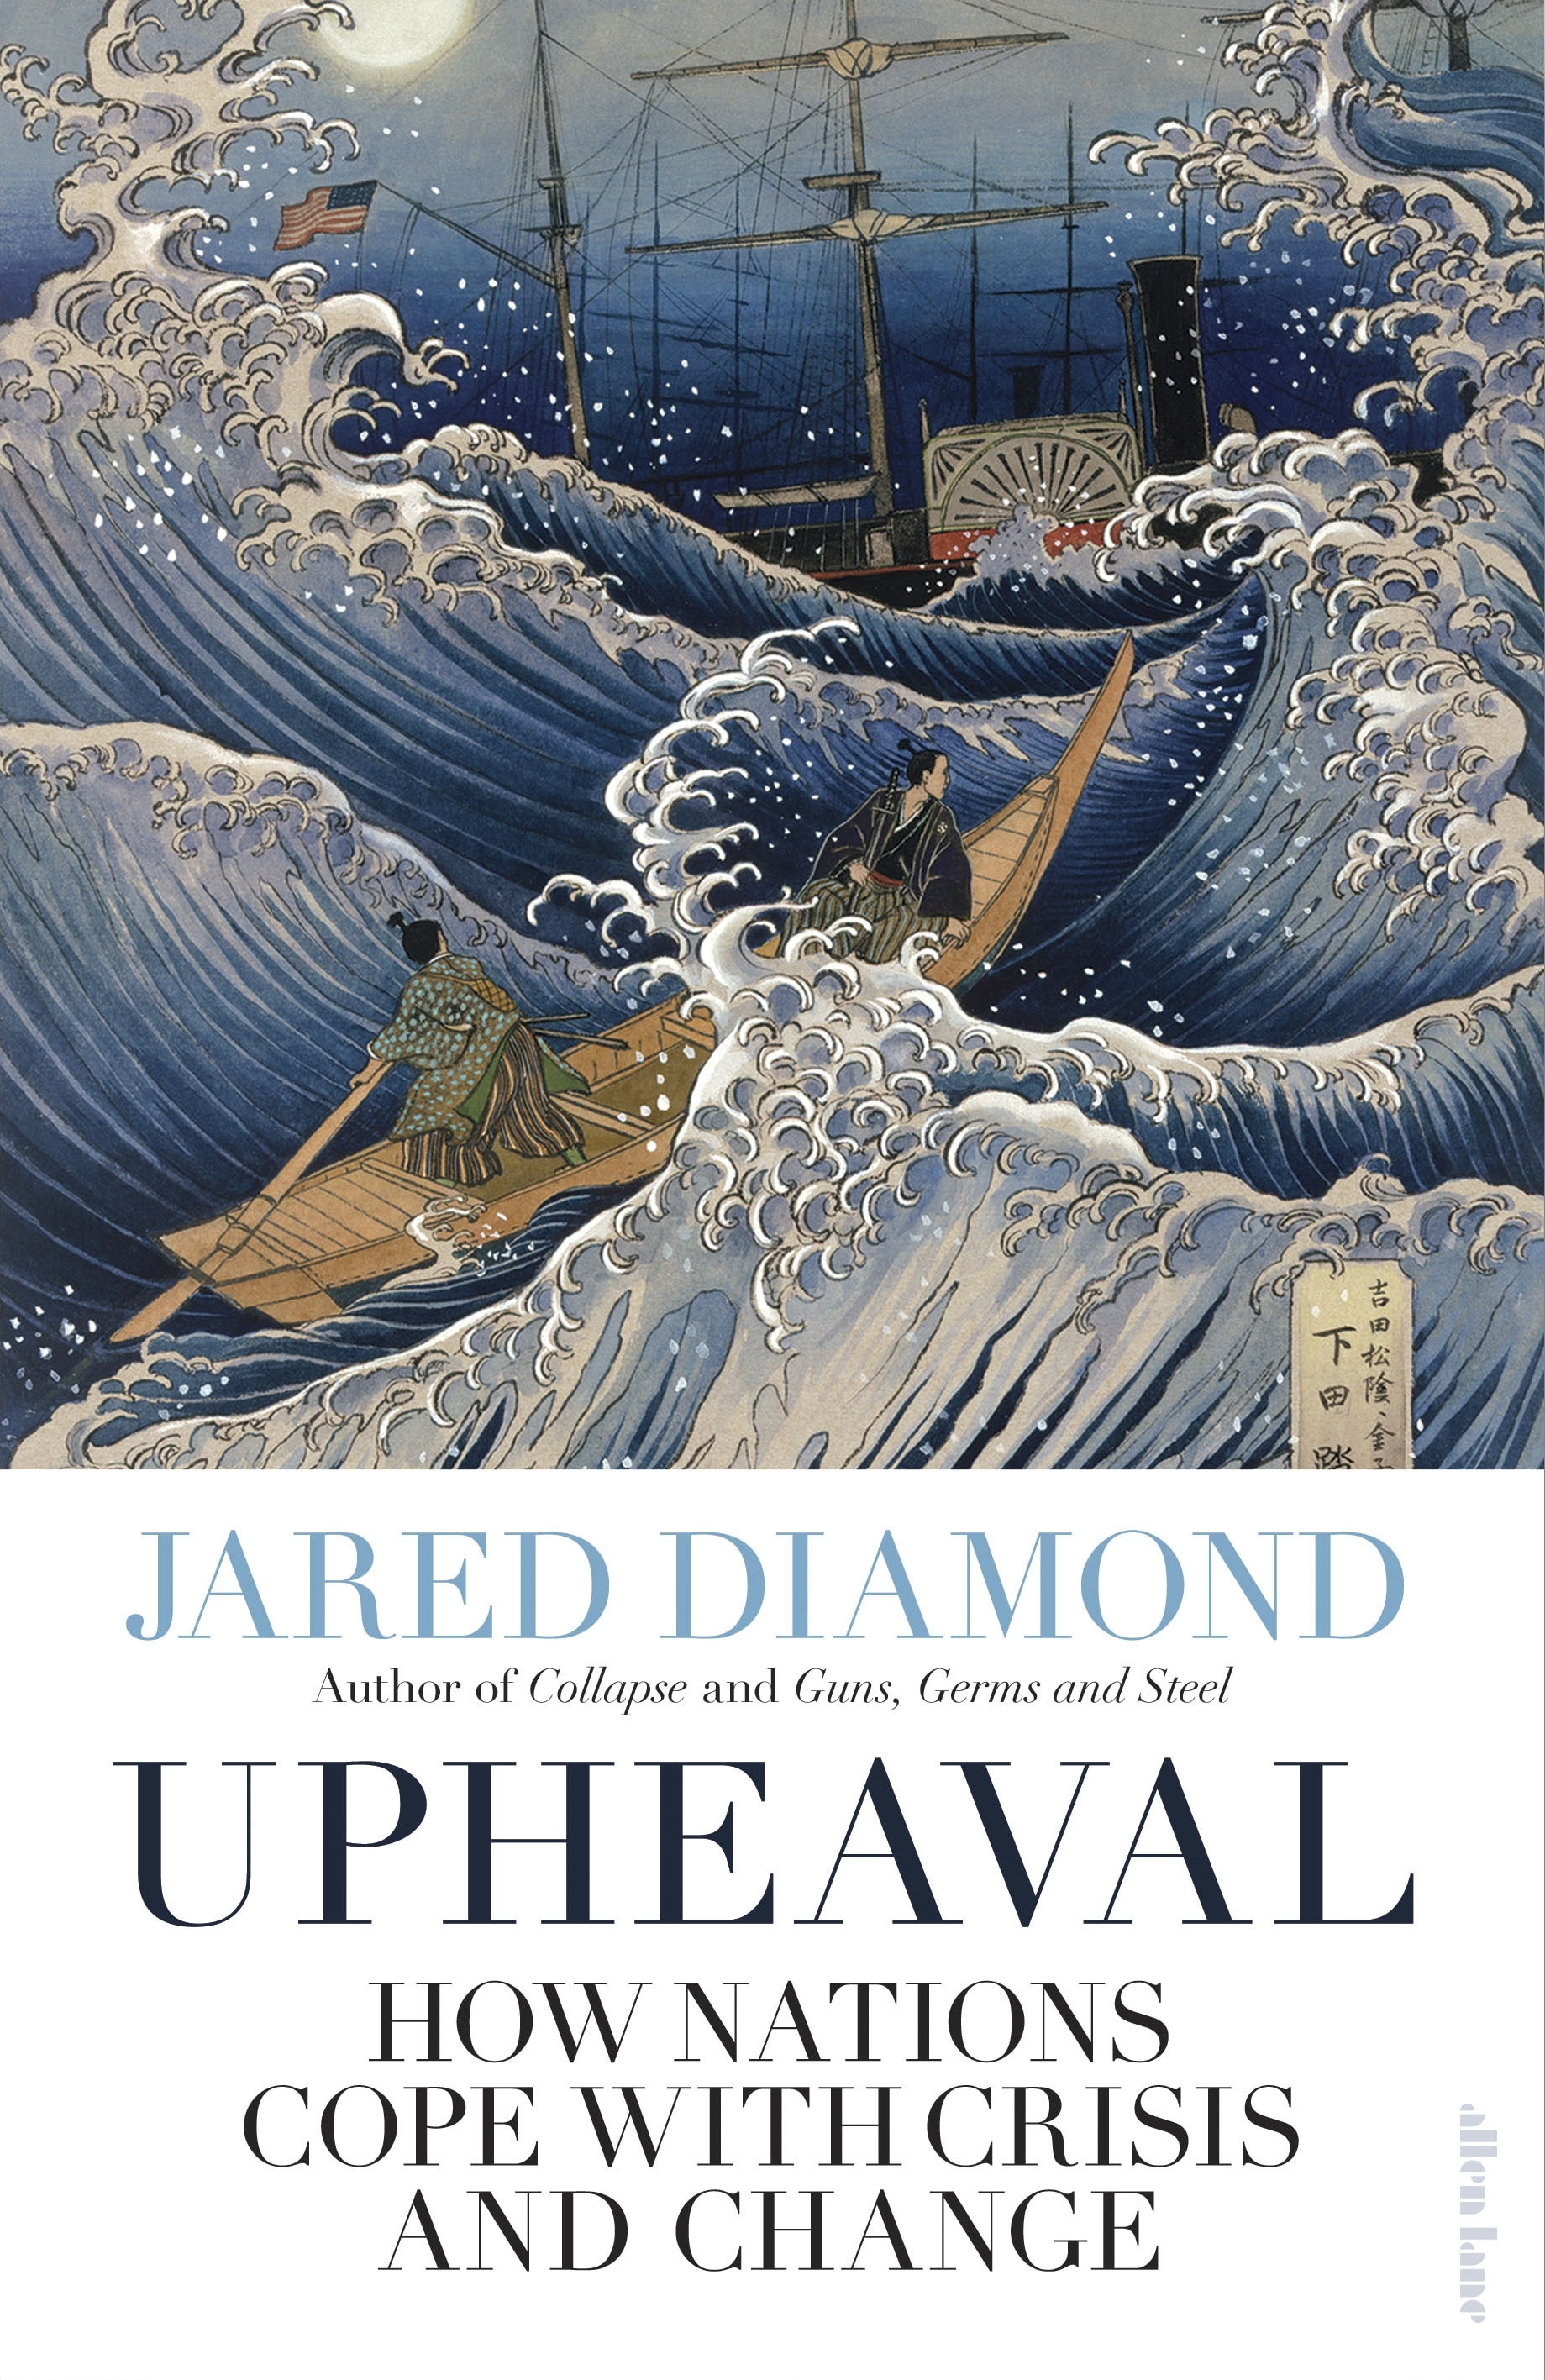 Book “Upheaval” by Jared Diamond — May 14, 2019